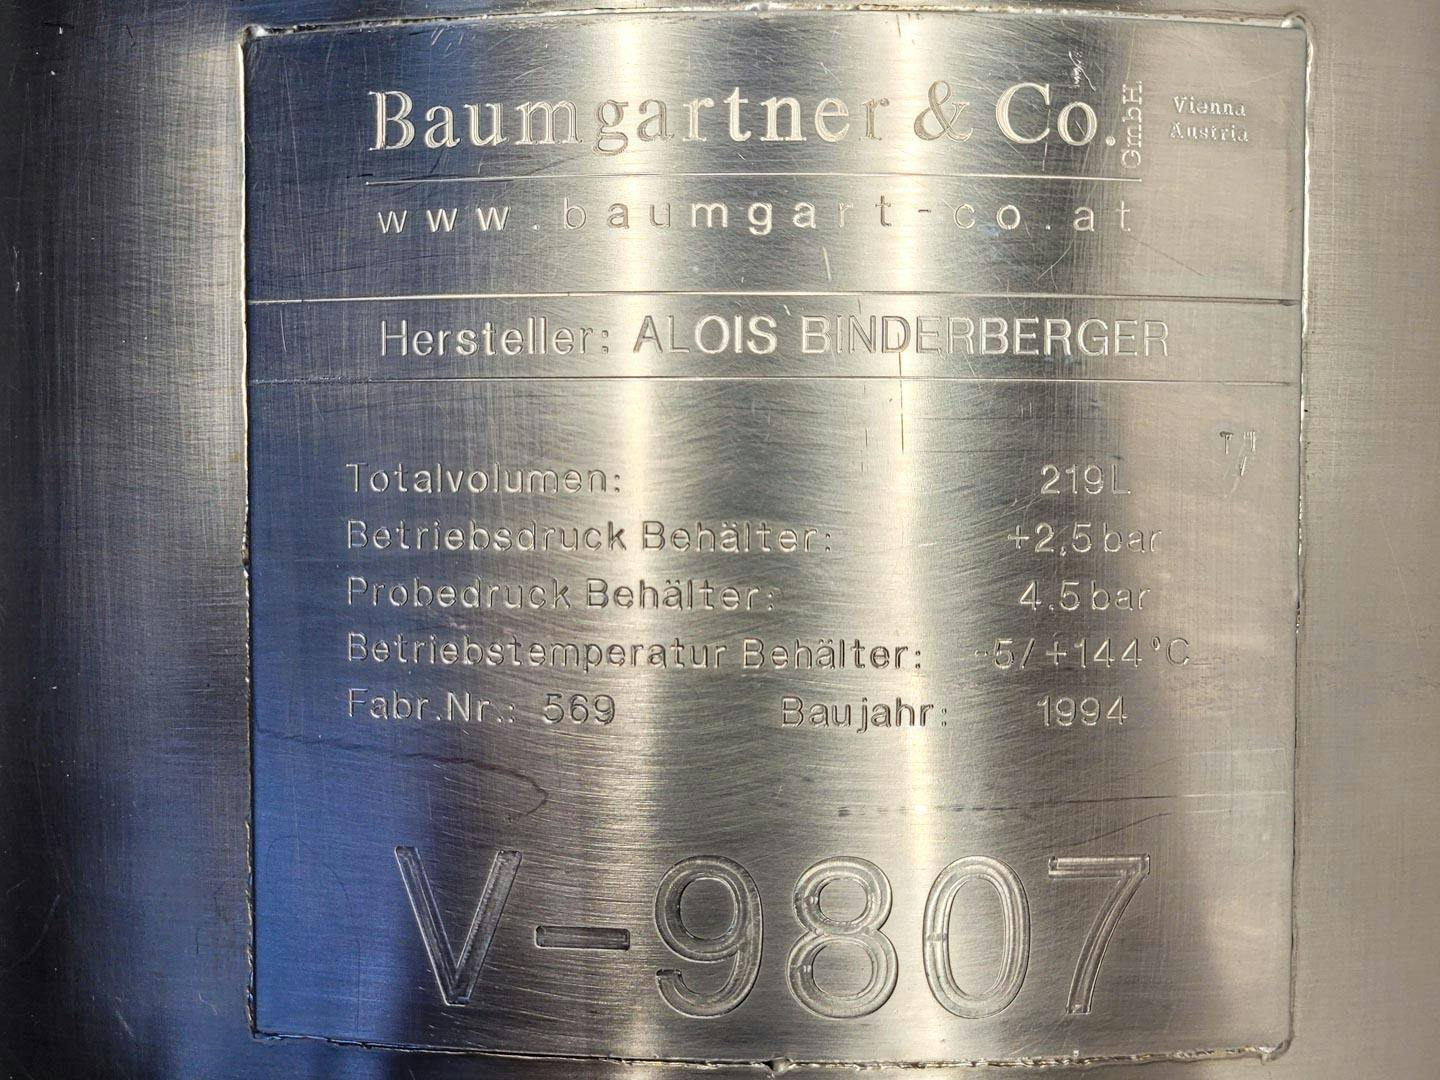 Baumgartner 219 Ltr. - Serbatoio a pressione - image 10